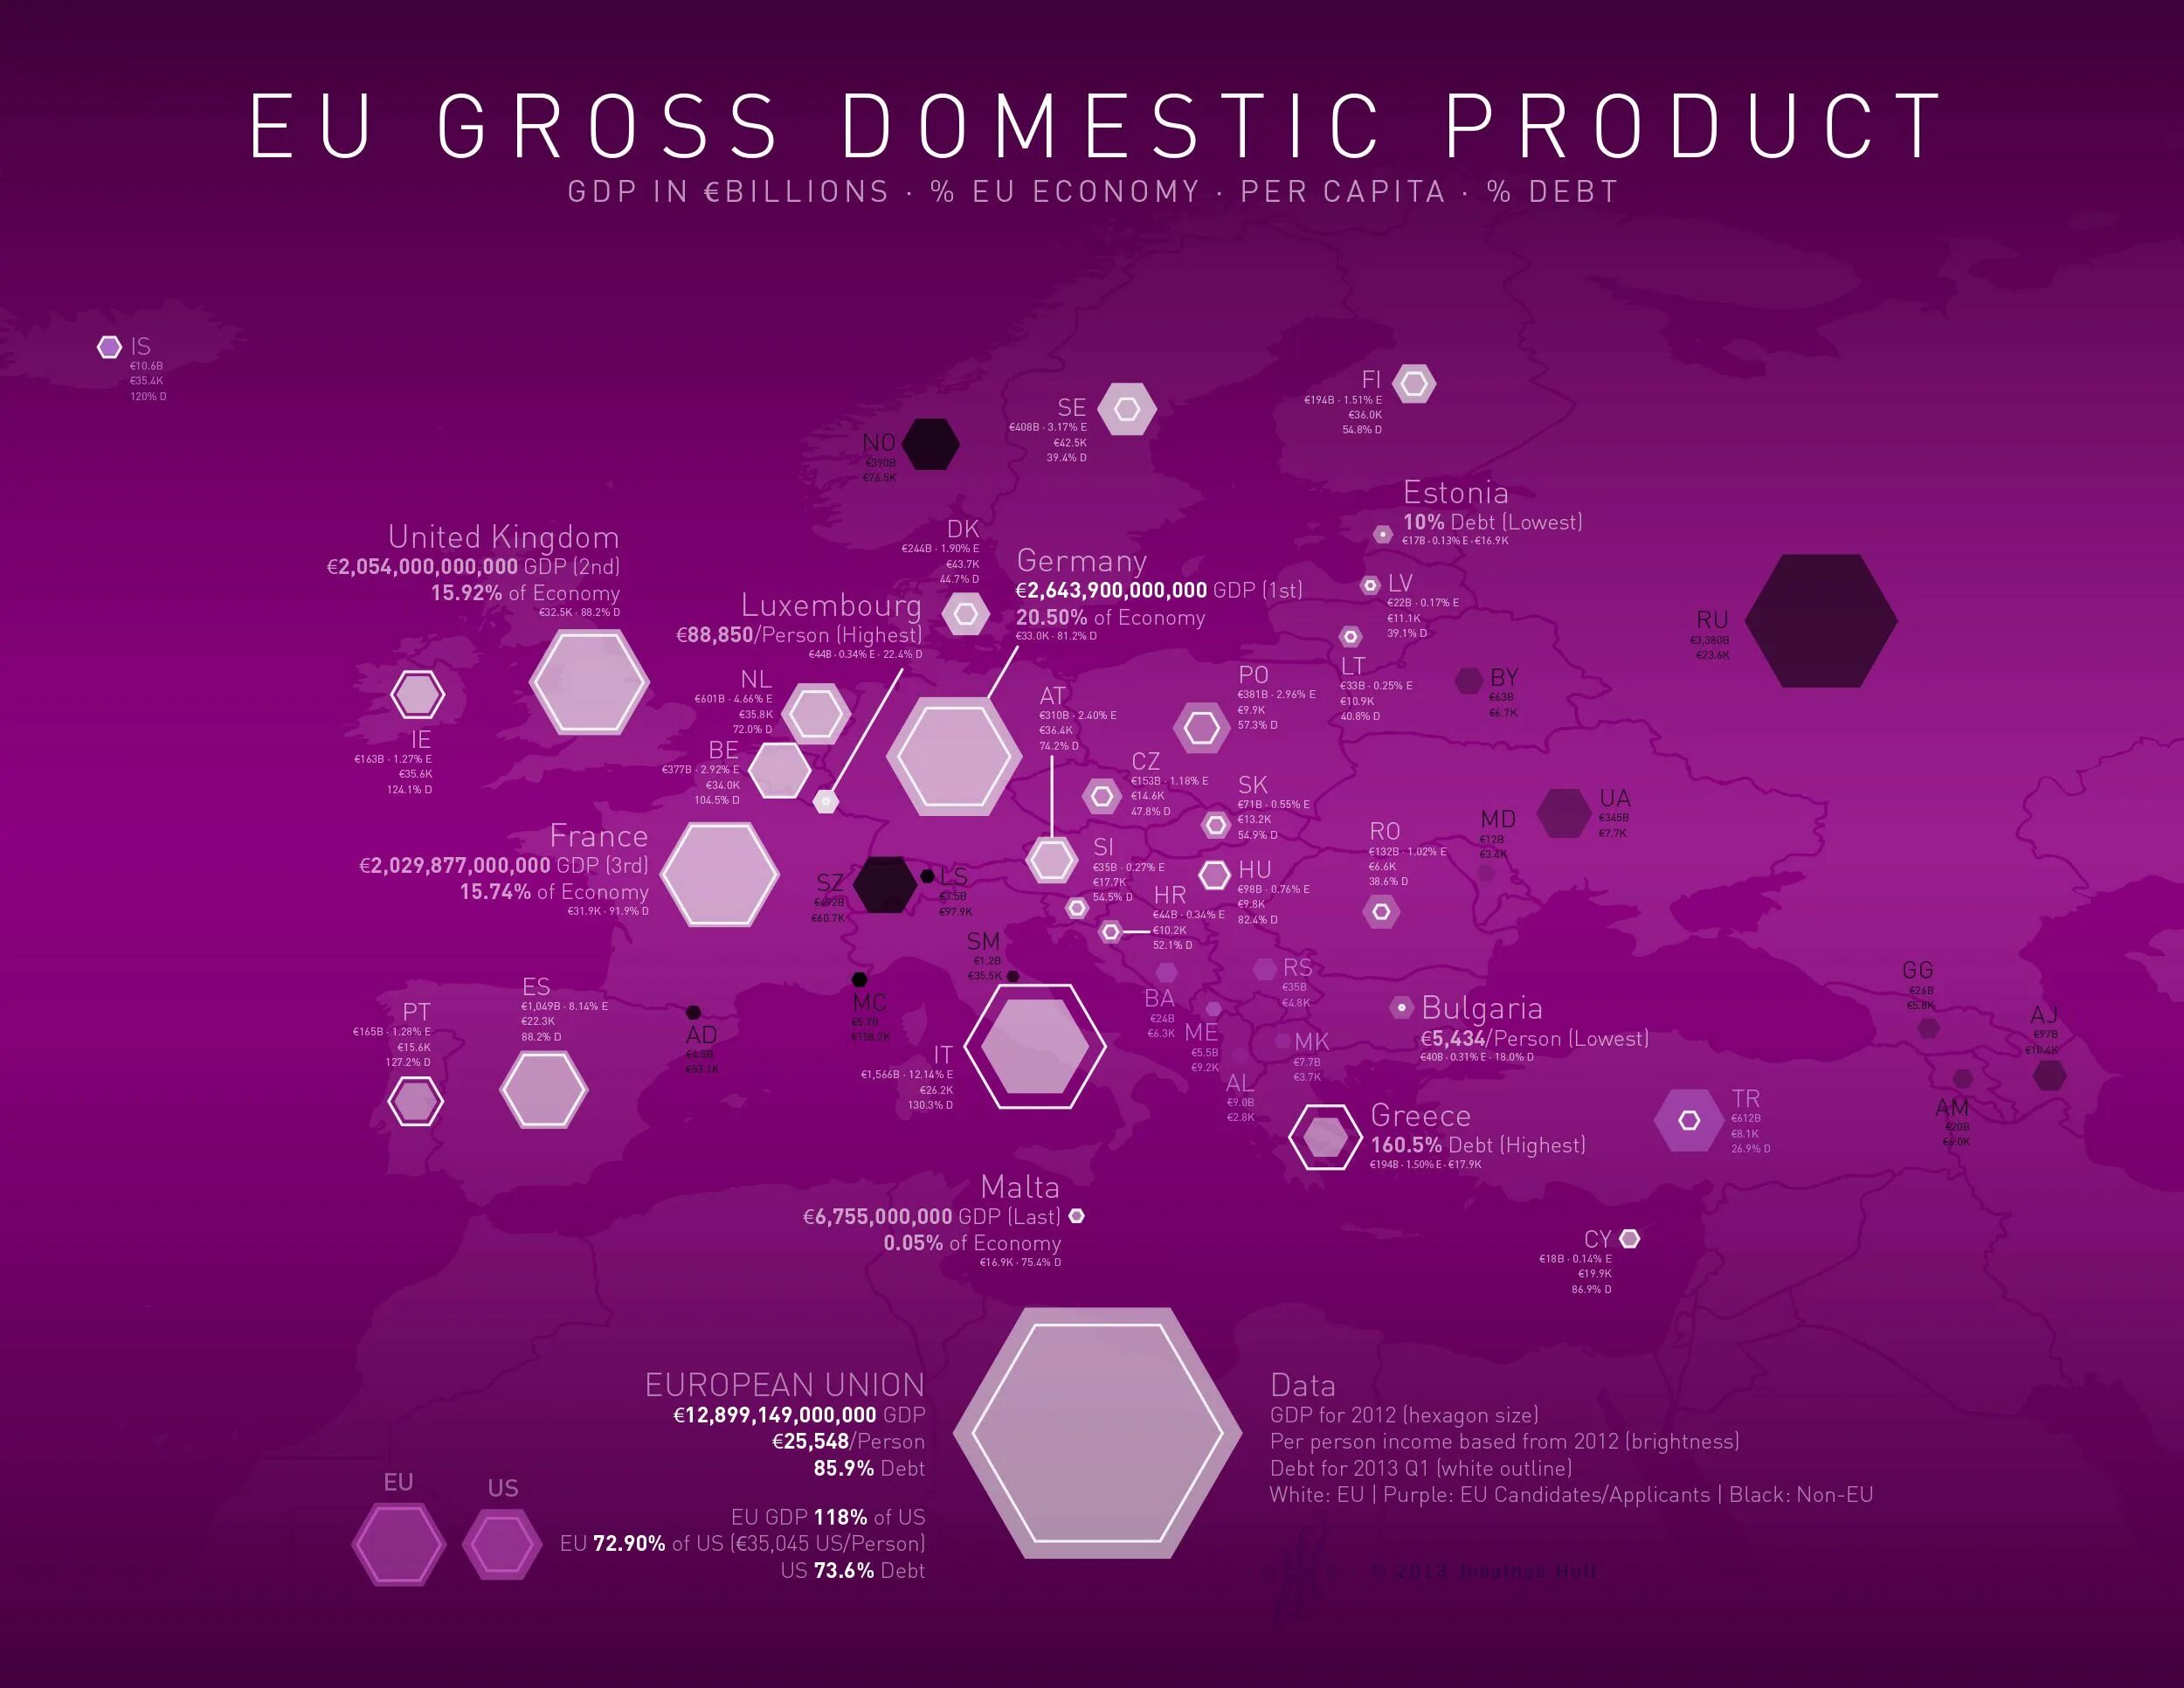 Gross domestic product. Германия инфографика. Калькулятор инфографика. Инфографика дефицит.